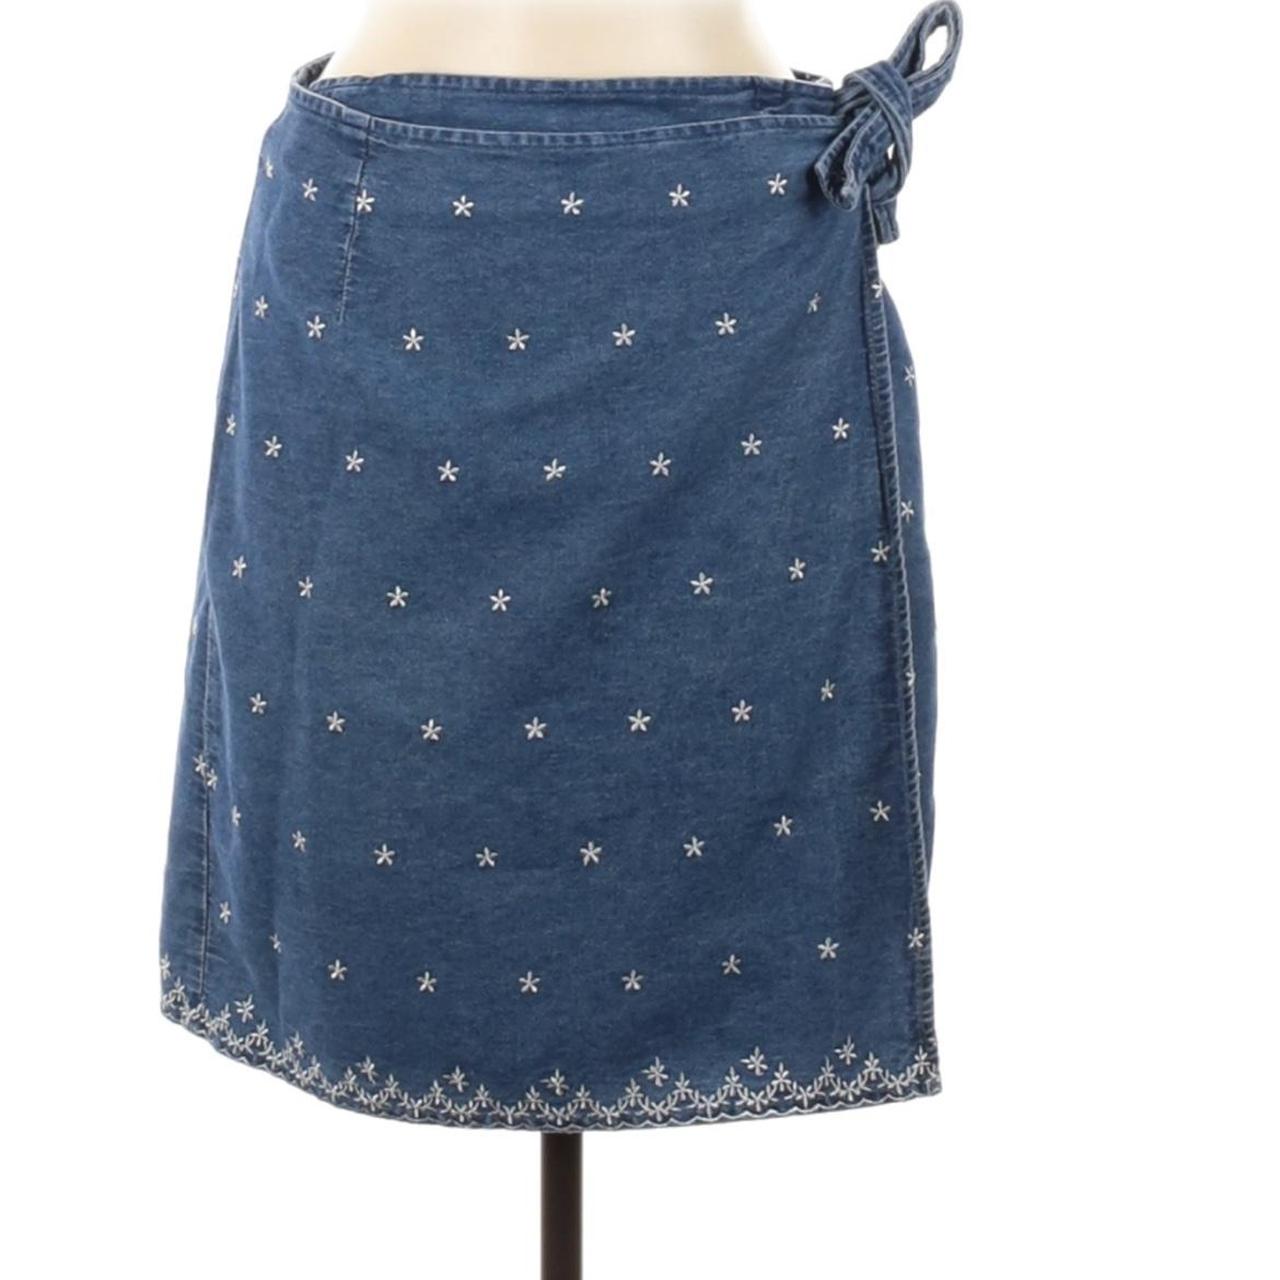 High Sierra Women's Blue and Navy Skirt (5)